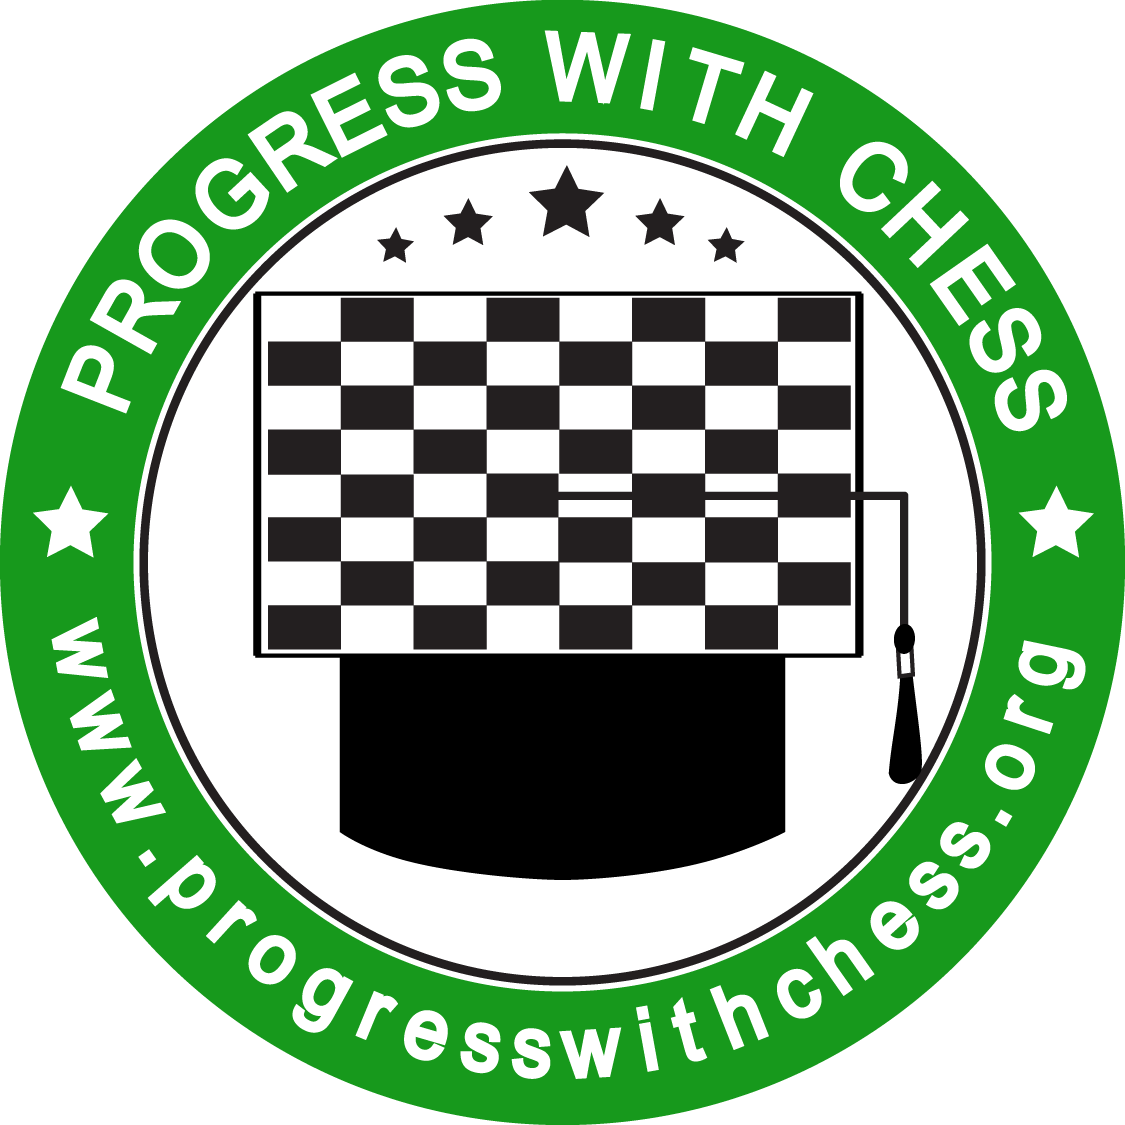 chess.org